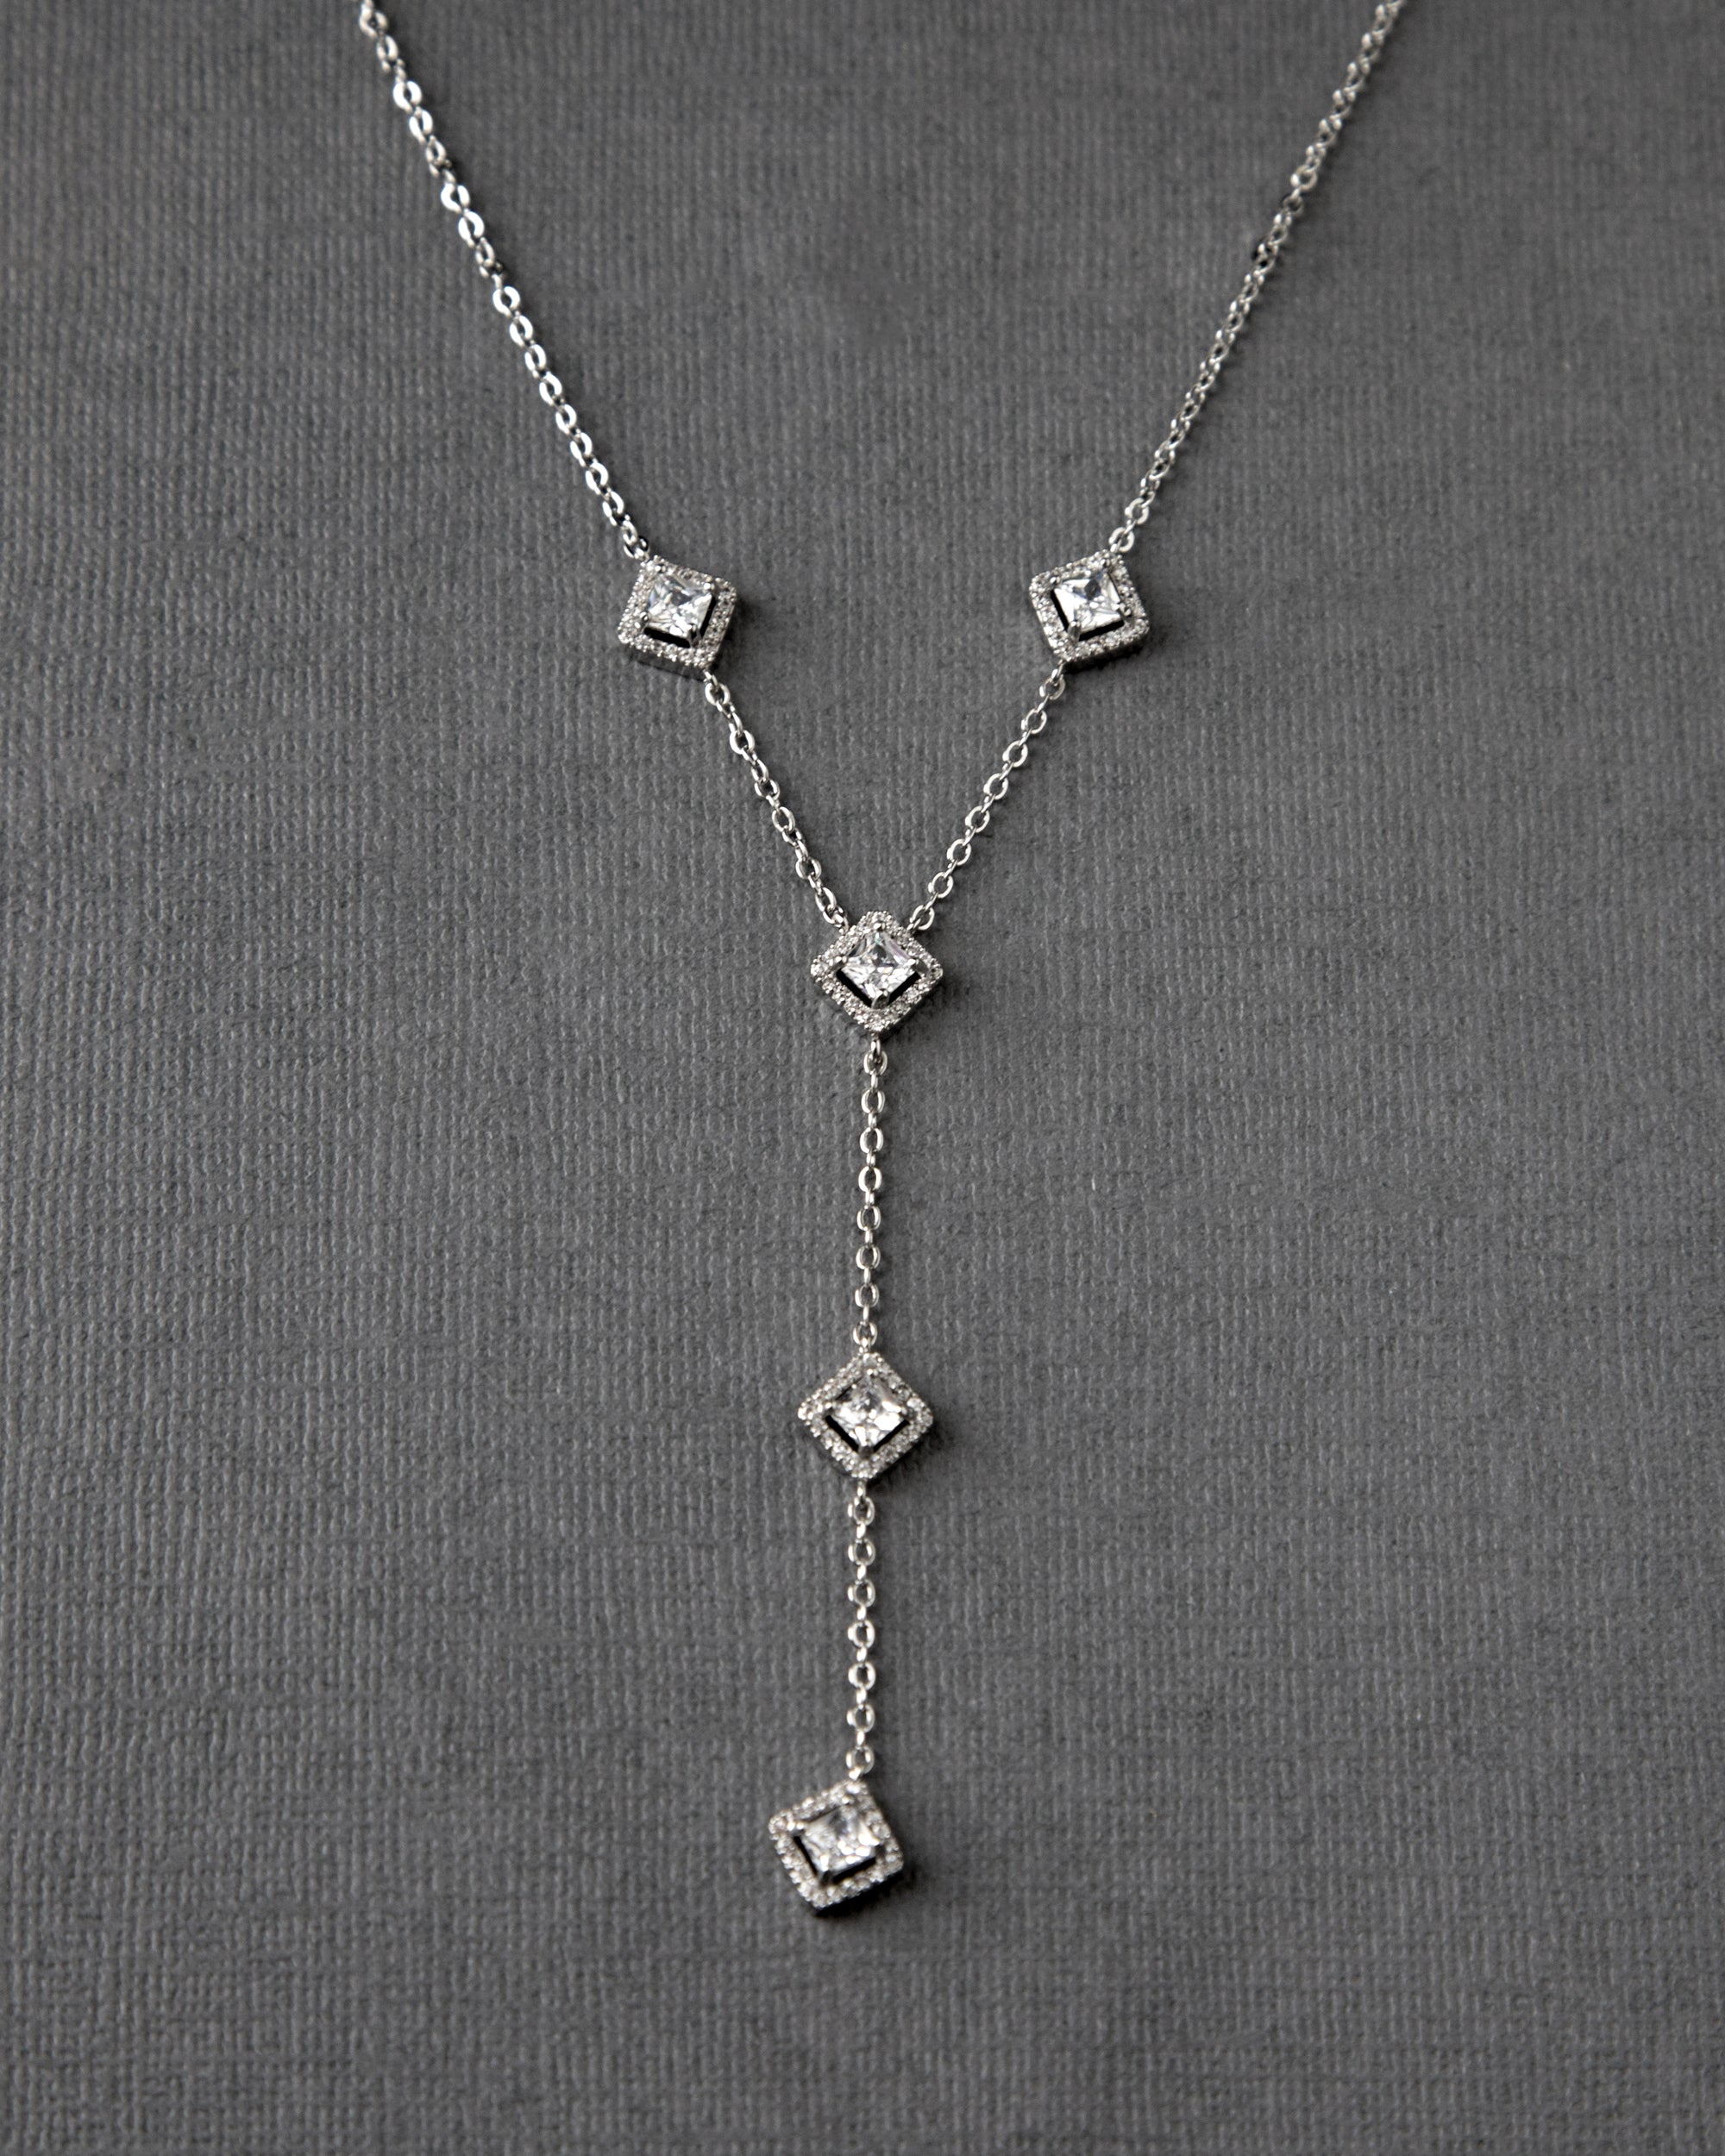 Elegant Y Drop Necklace with Pave Square CZ